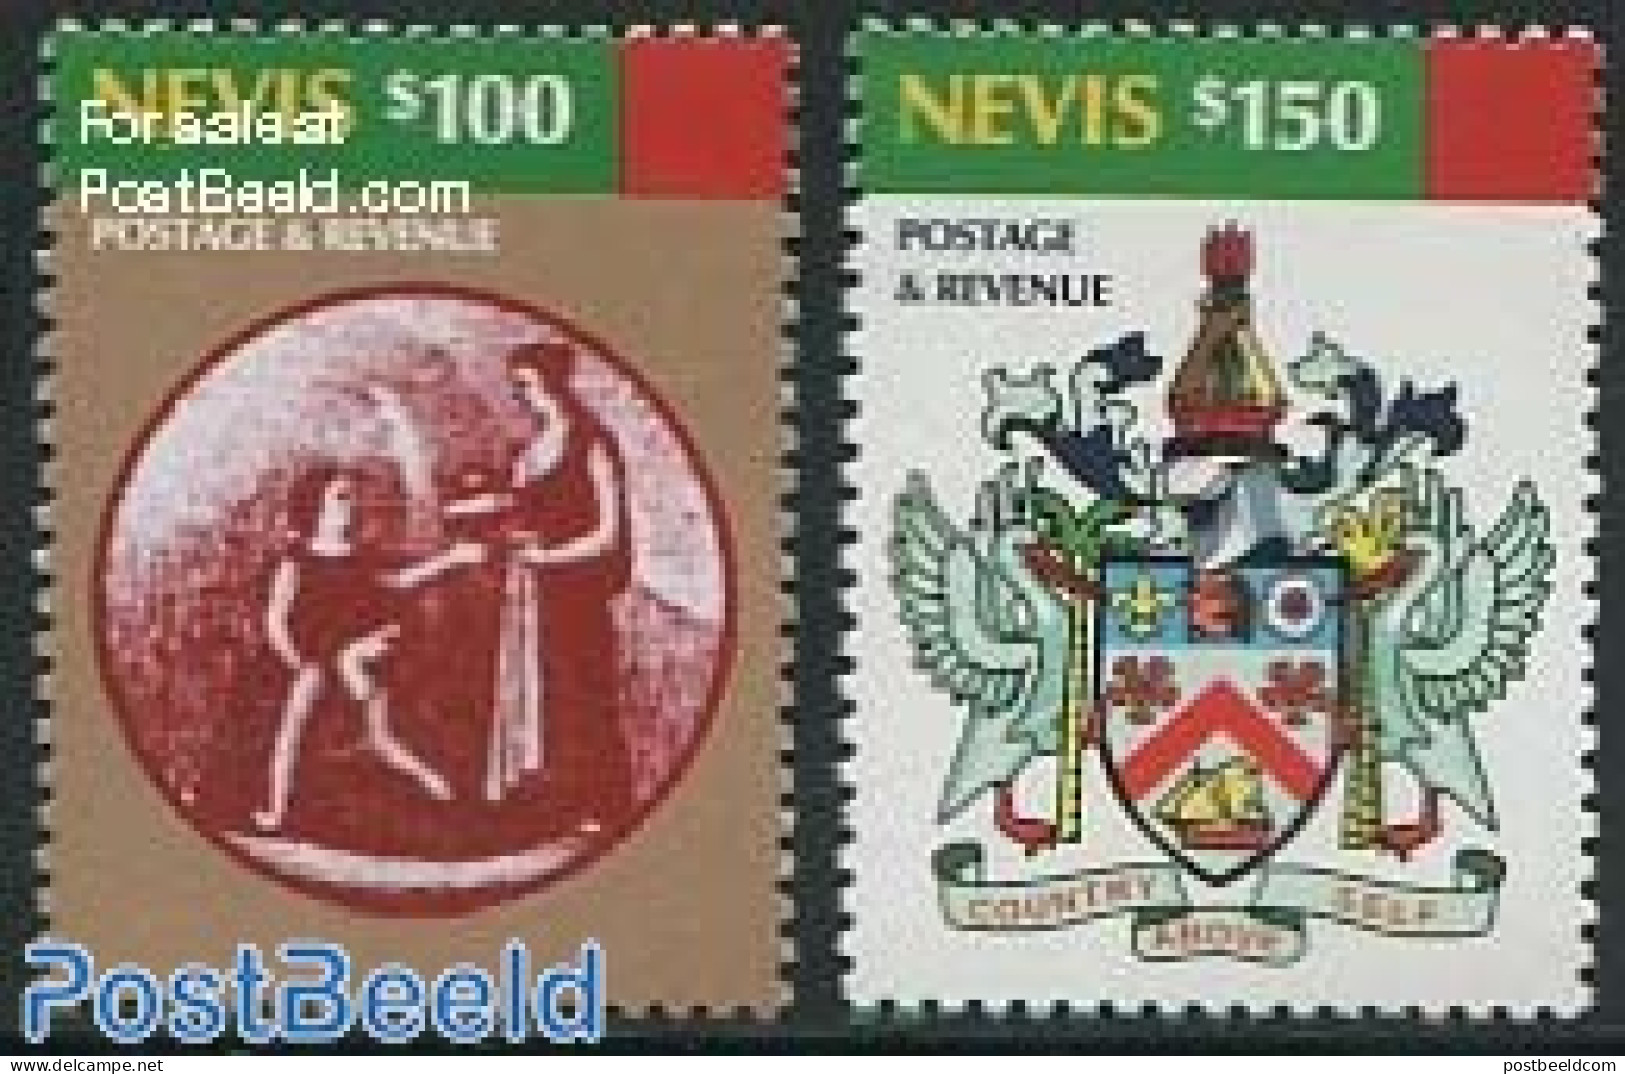 Nevis 2012 Definitives 2v, Mint NH, History - Coat Of Arms - St.Kitts-et-Nevis ( 1983-...)